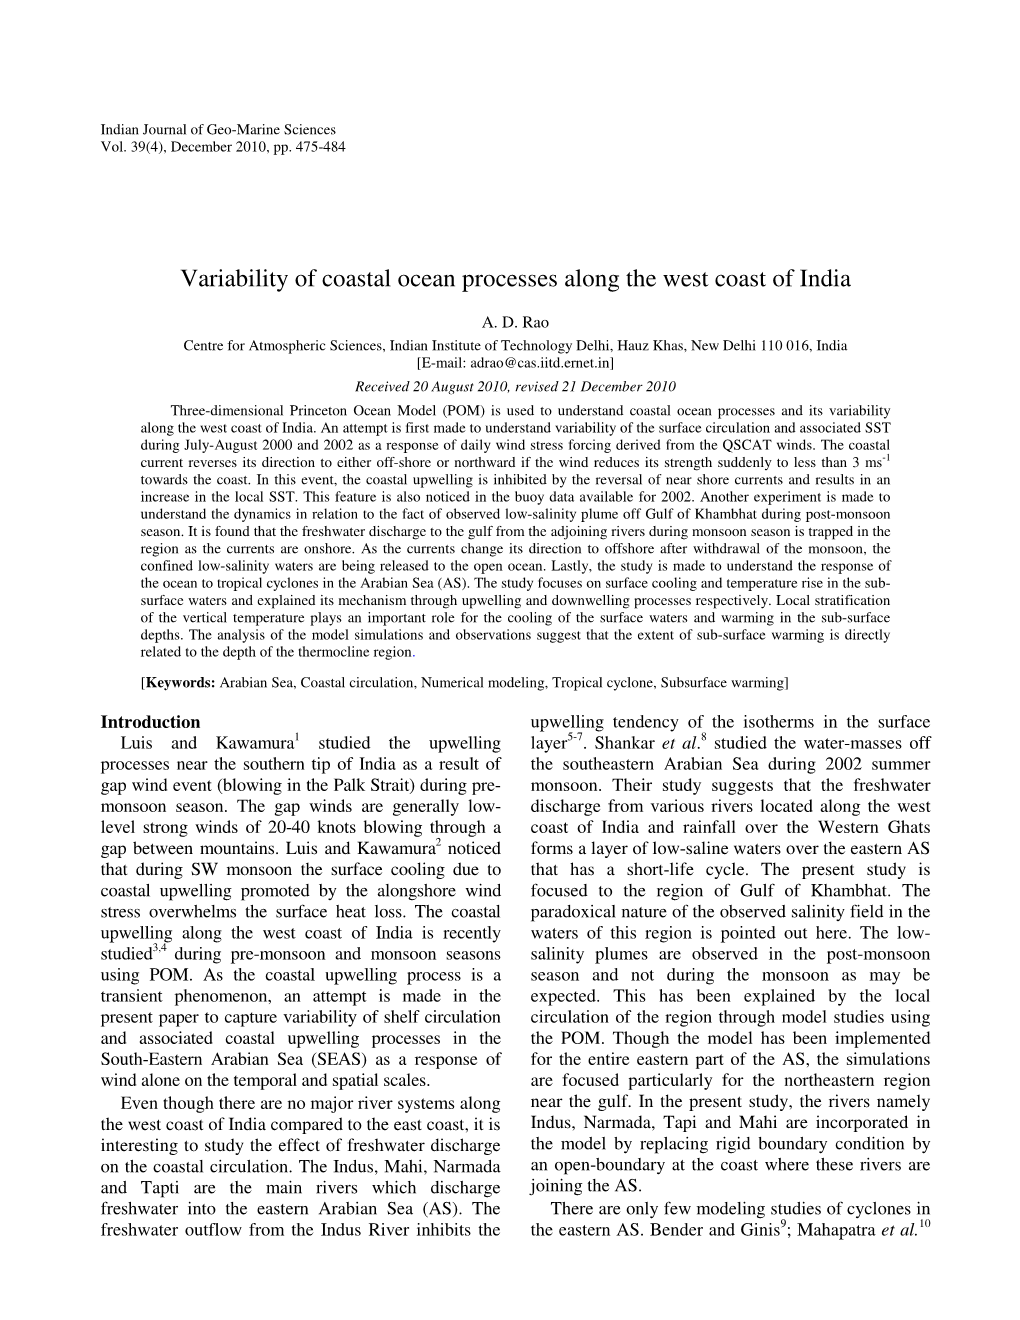 Variability of Coastal Ocean Processes Along the West Coast of India